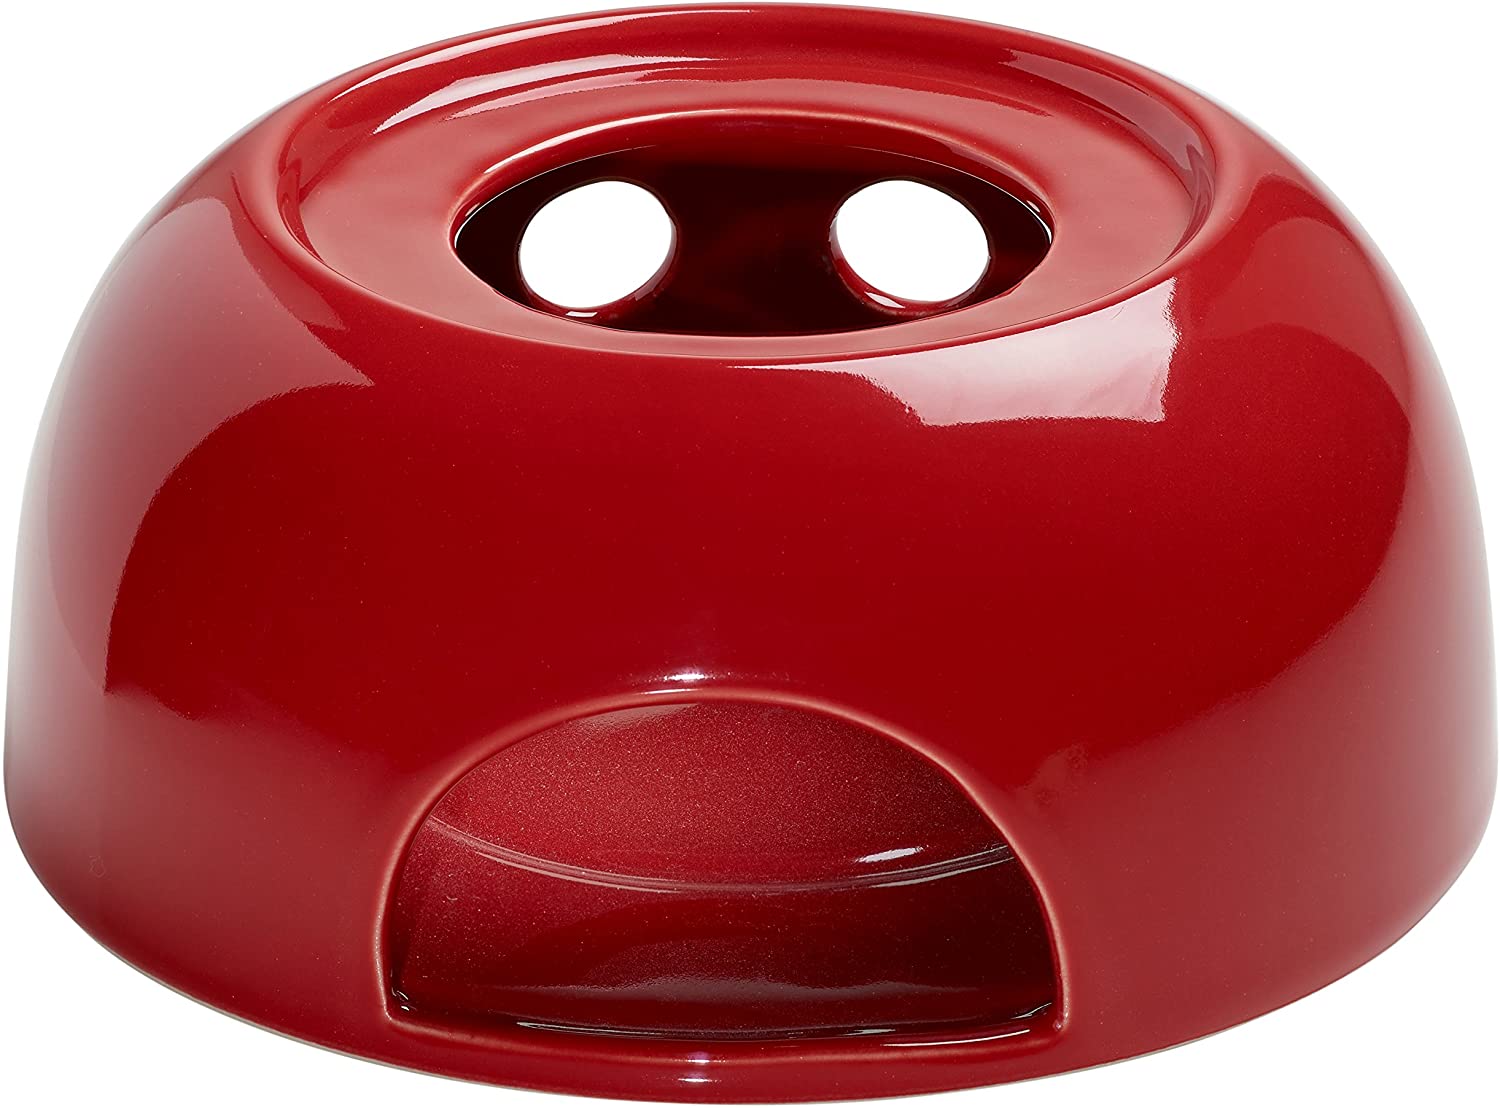 Maxwell & Williams InfusionsT 17.5 cm, Red, Gift Box, Ceramic, IT42066 Teapot warmer, 17.5 x 17.5 x 8 cm